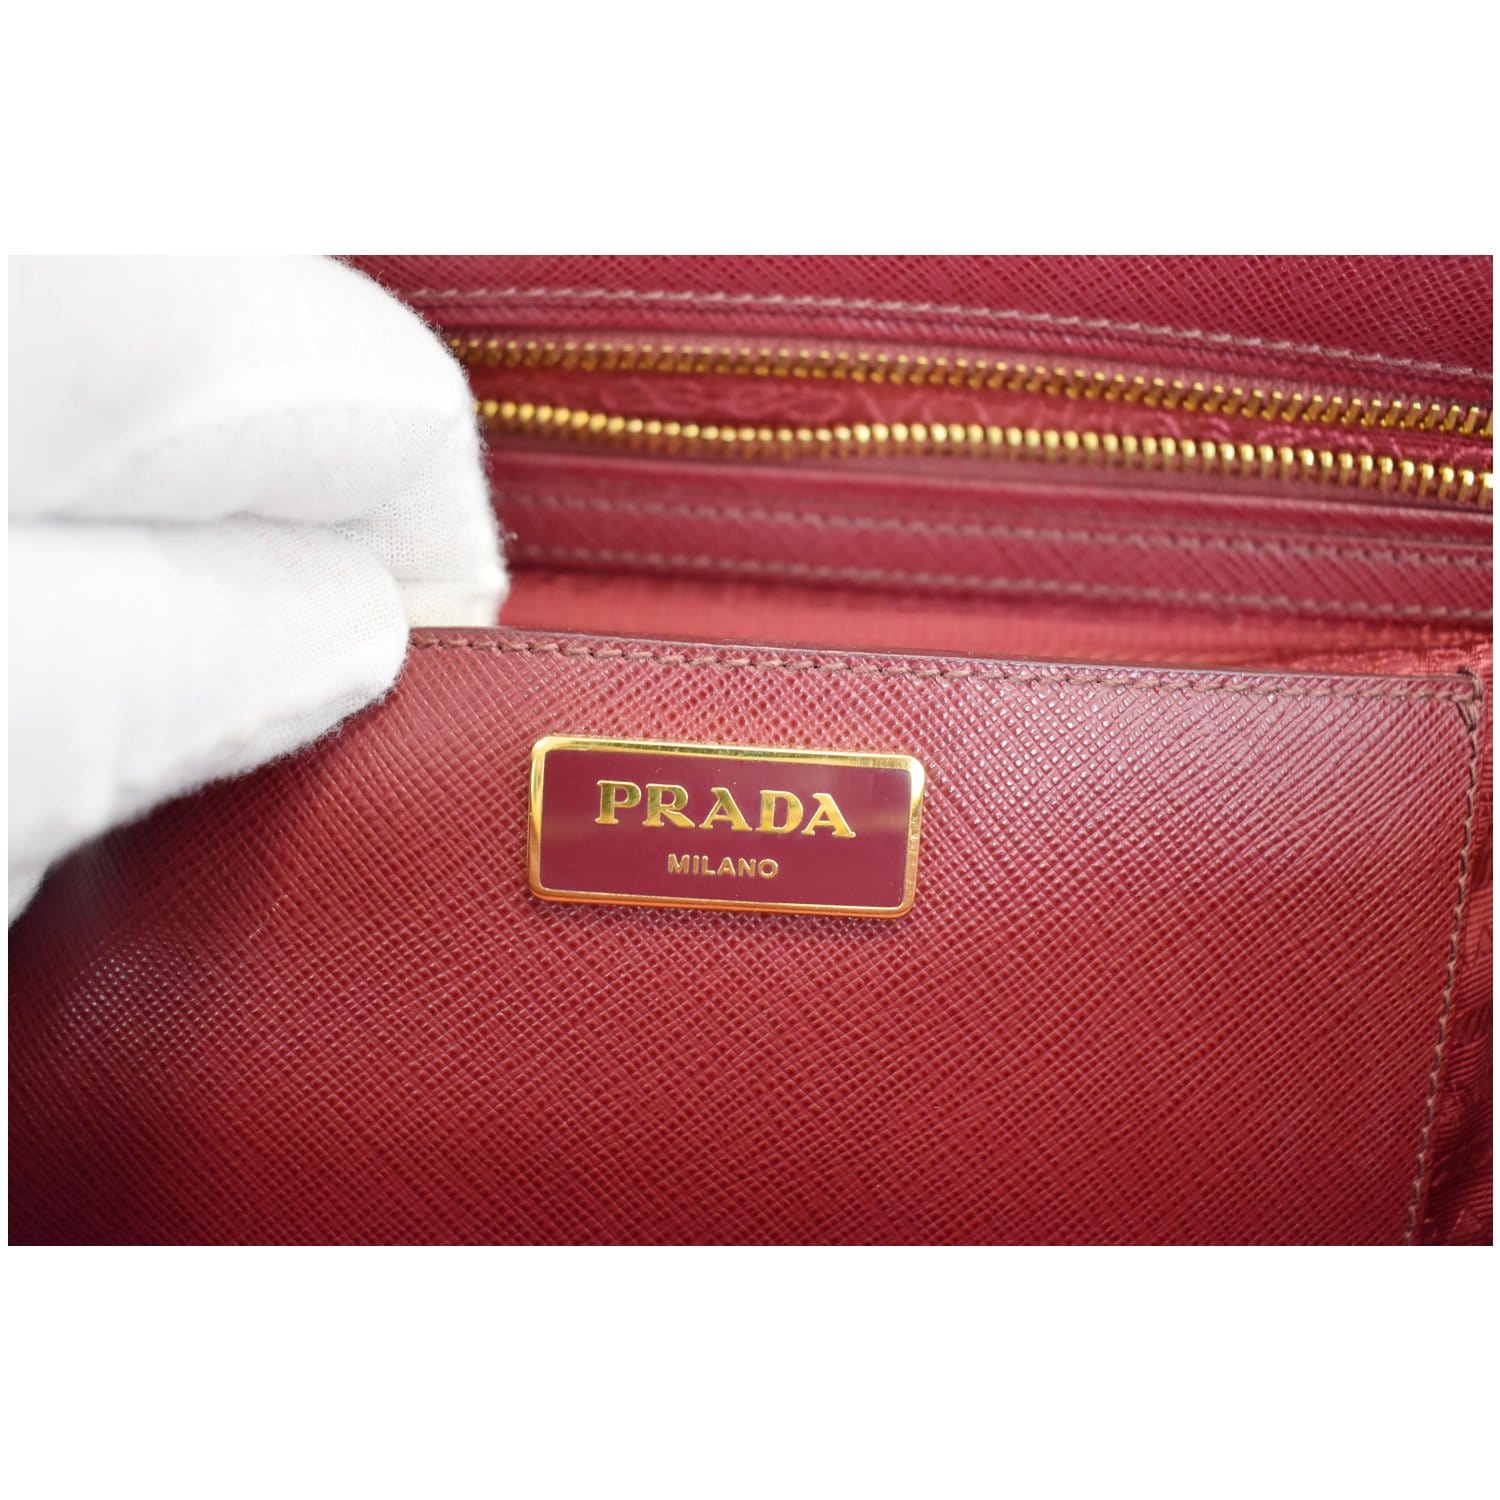 Prada Red Saffiano Lux Leather Large Gardener's Tote Prada